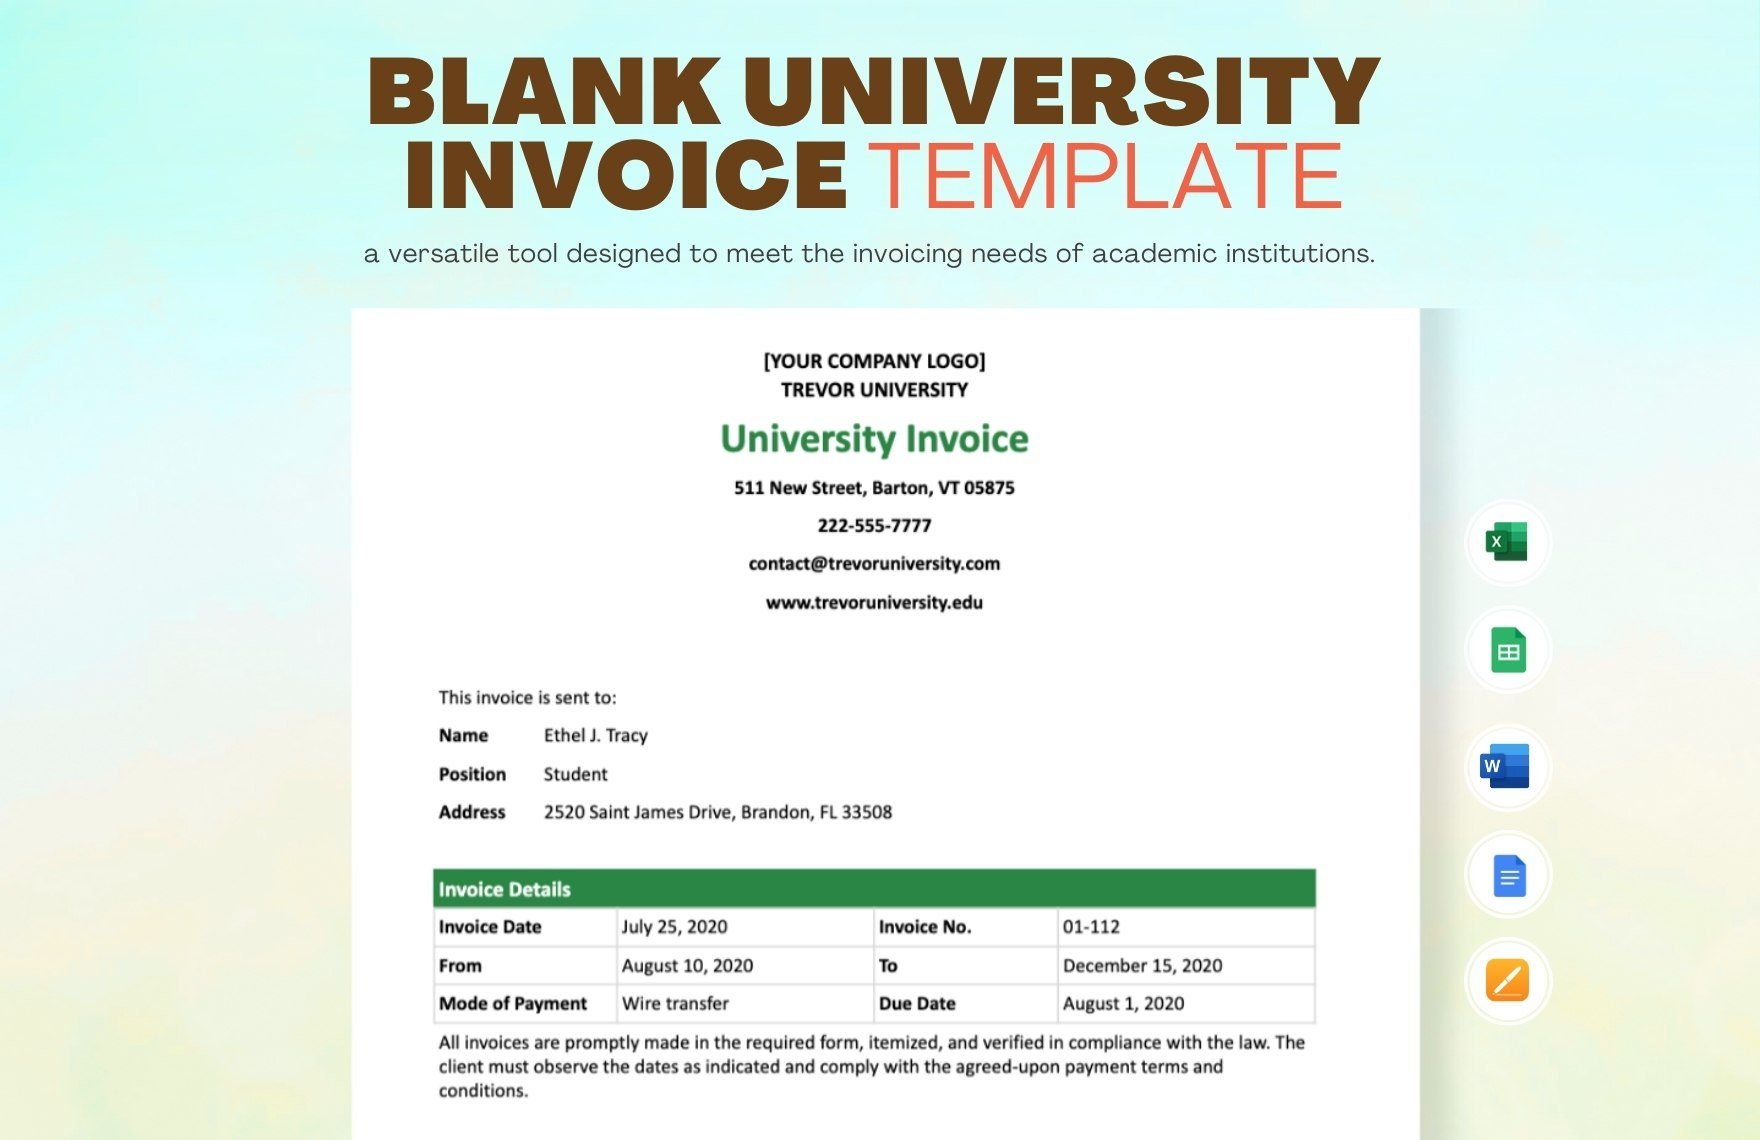 Blank University Invoice Template